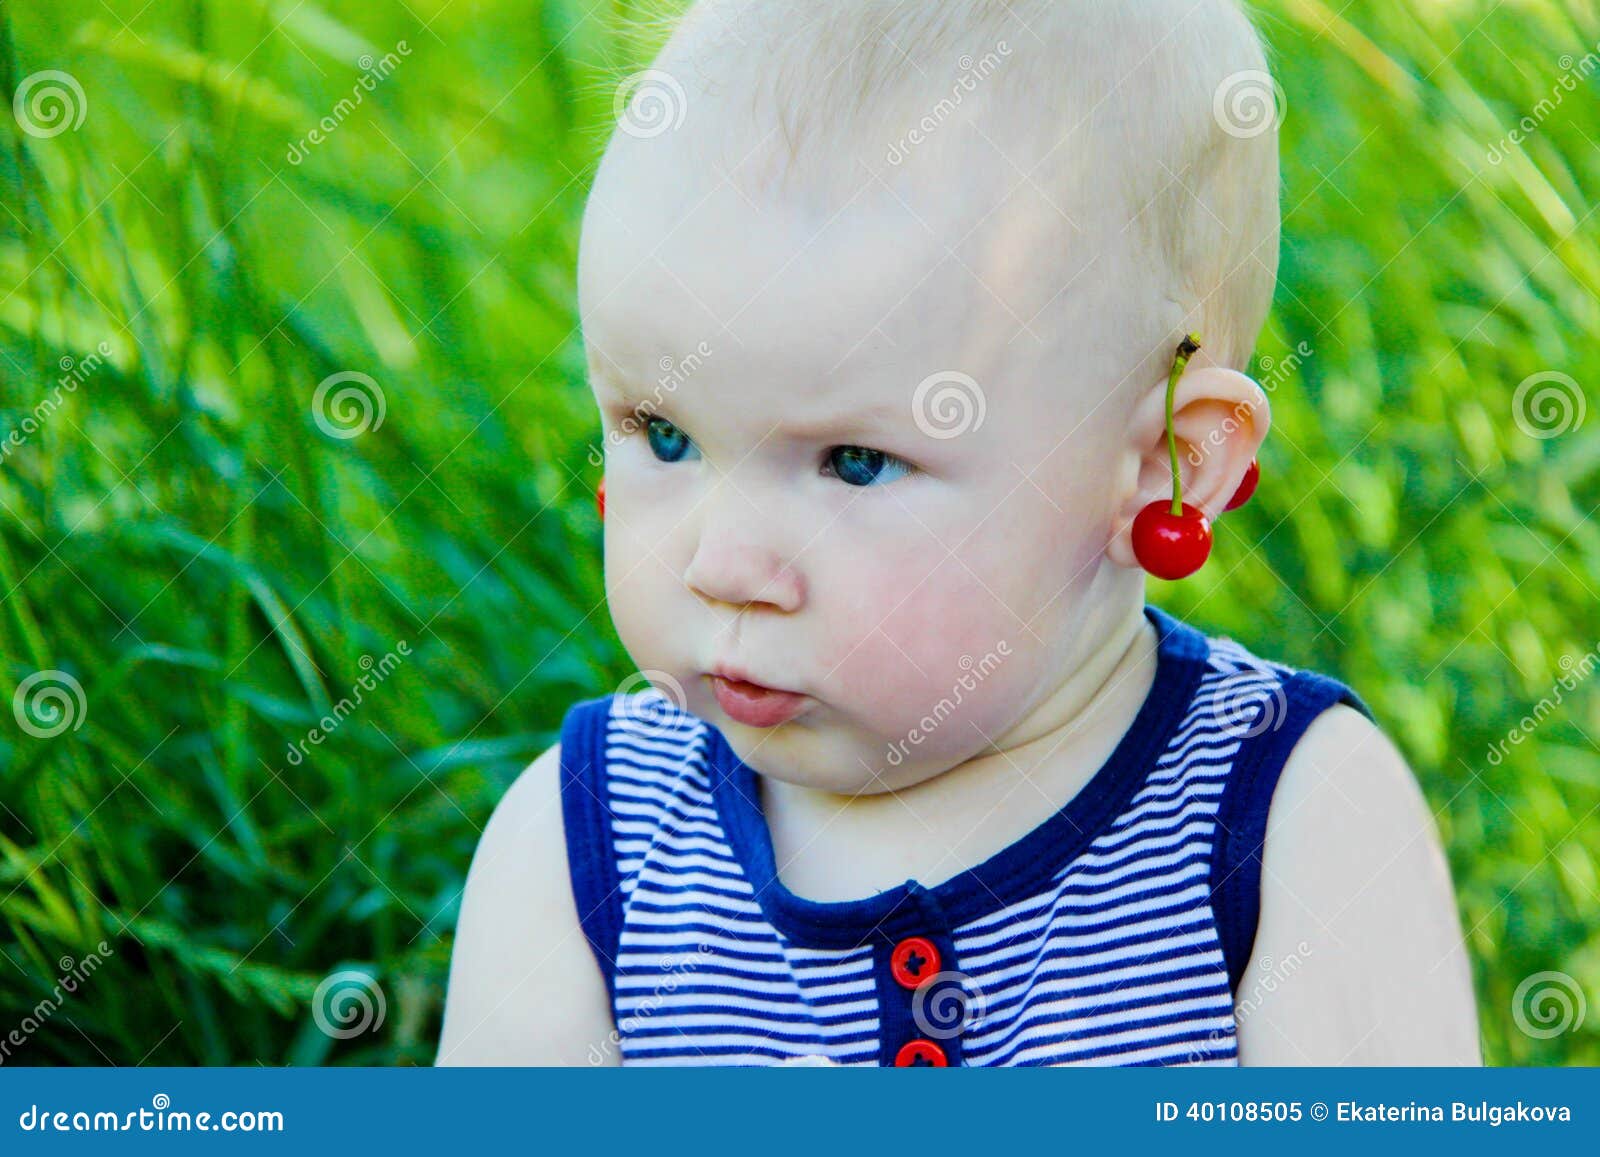 Safely Pierce Your Baby's Ears - Blomdahl USA